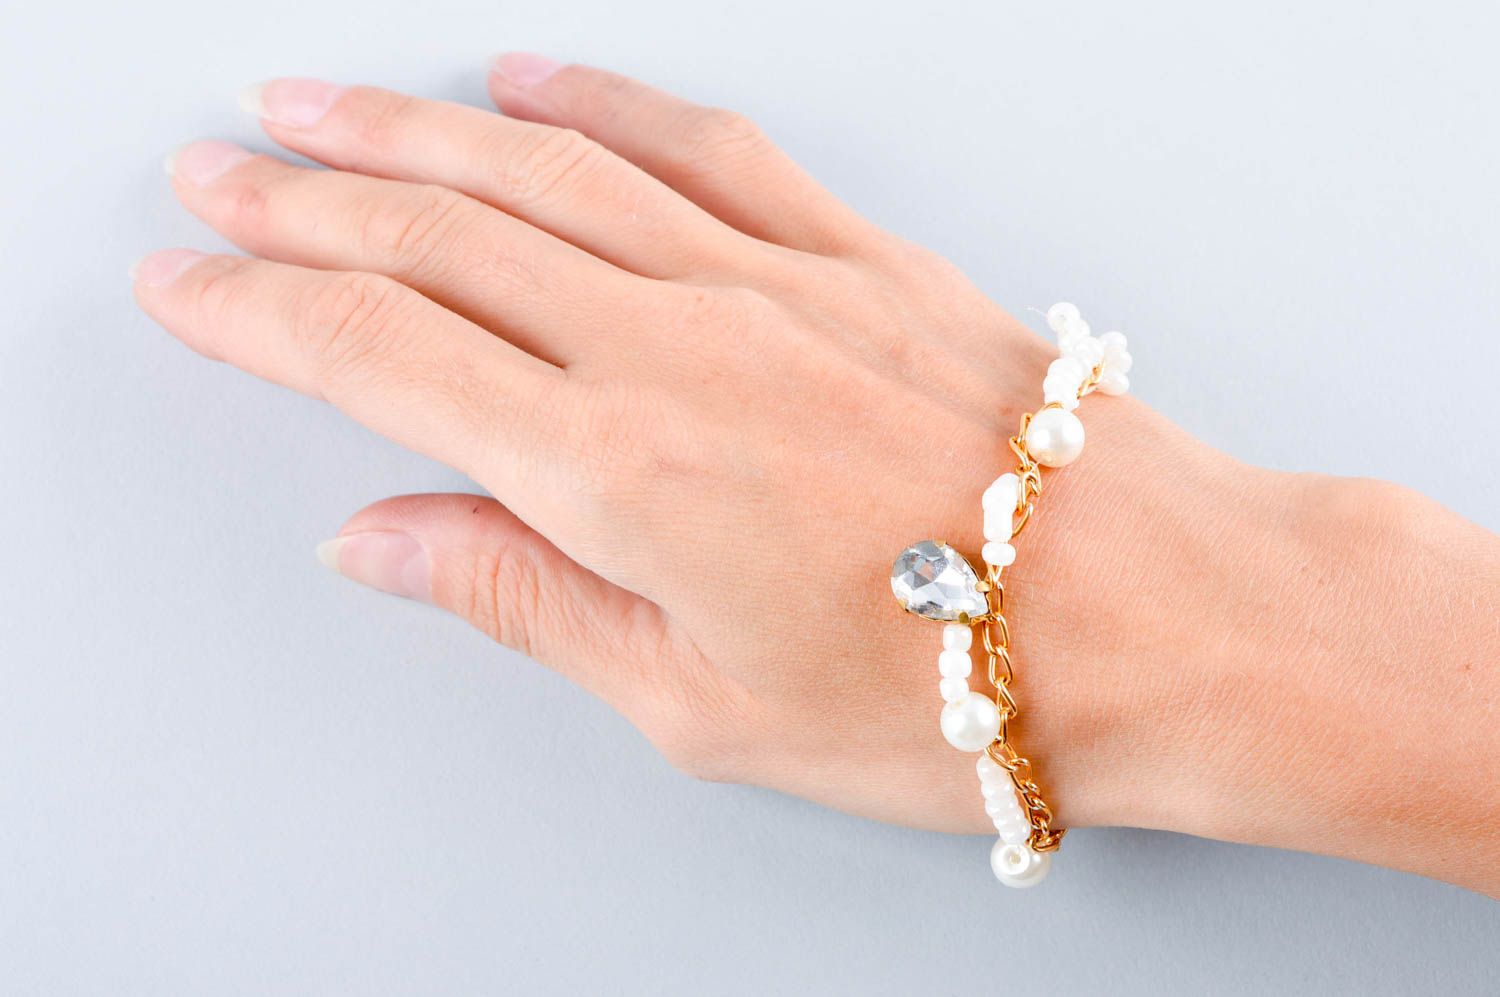 Handmade bracelet designer bracelet beads accessory unusual gift beaded jewelry photo 5